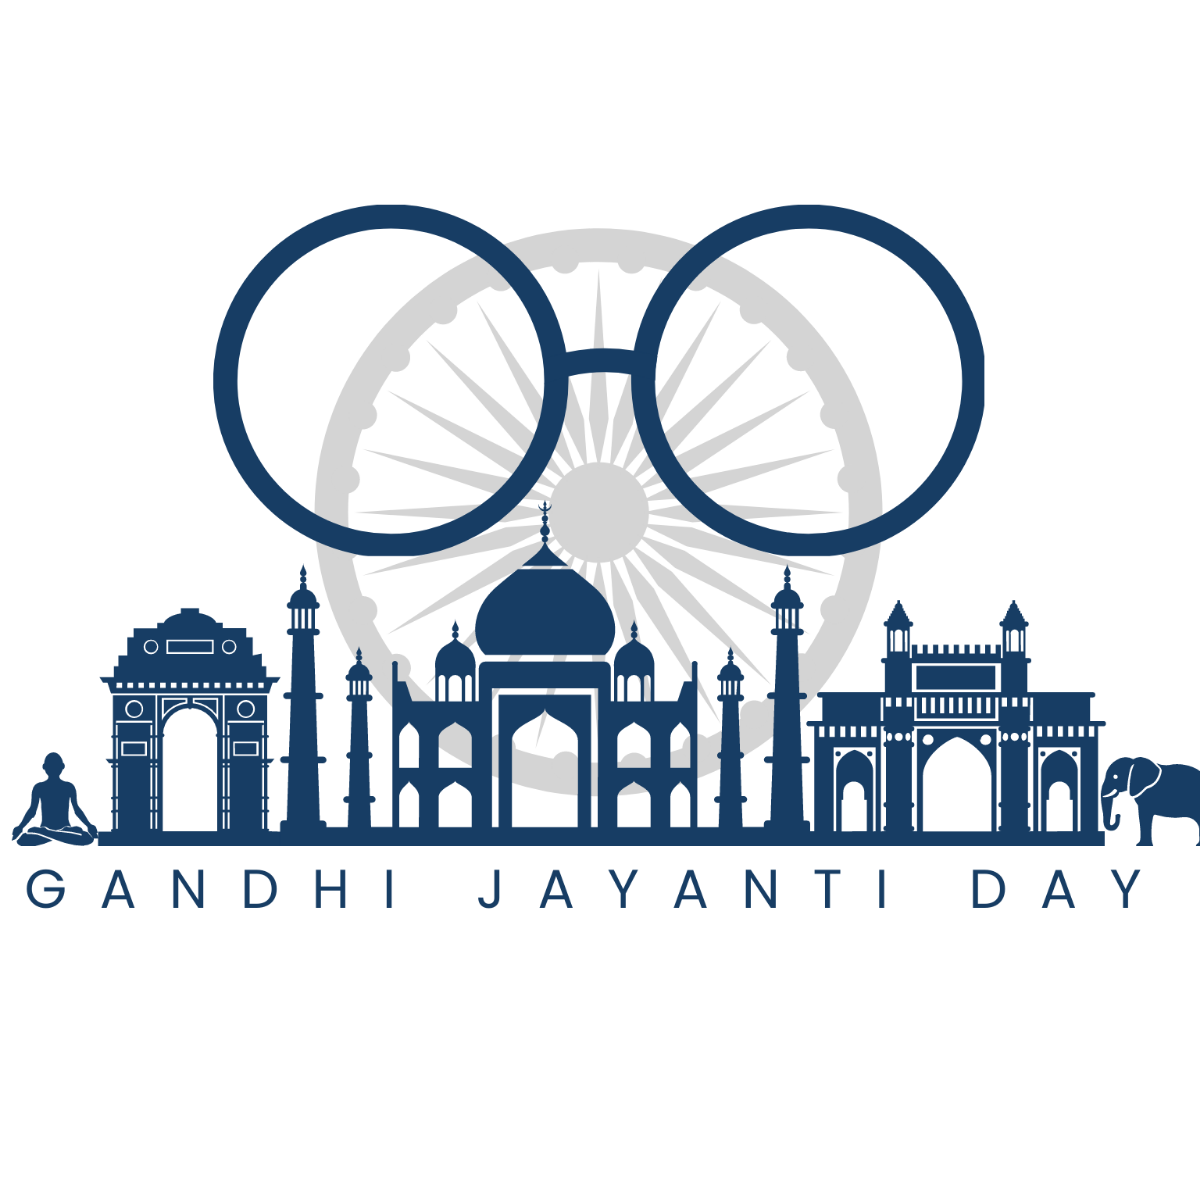 Free Gandhi Jayanti Day Vector Template